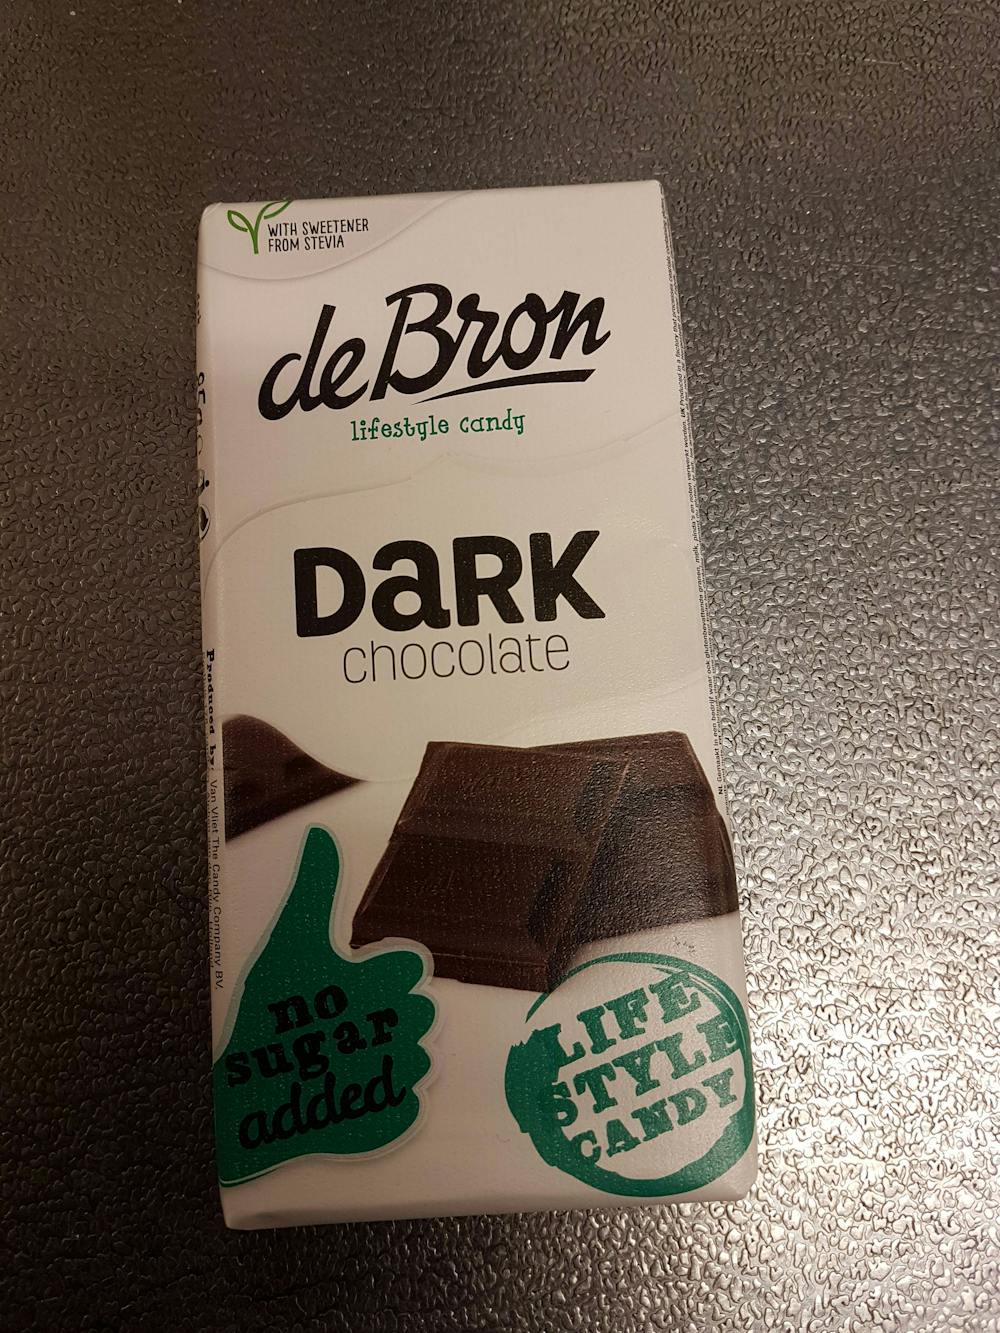 dark chocolate, deBron